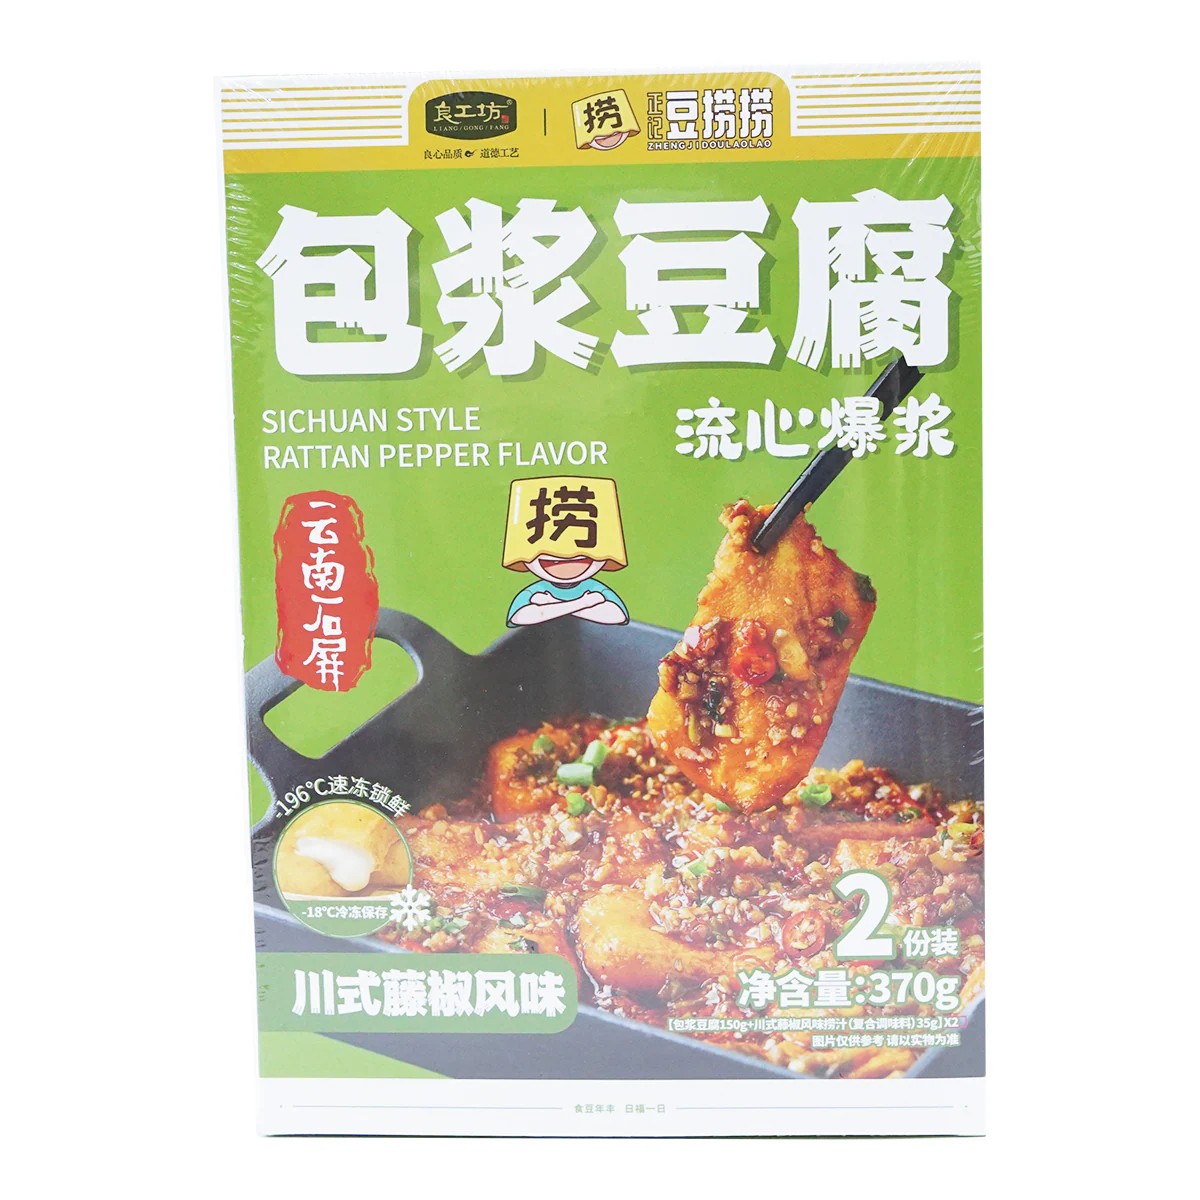 soft-tofu-sichuan-style-ratten-pepper-flavor